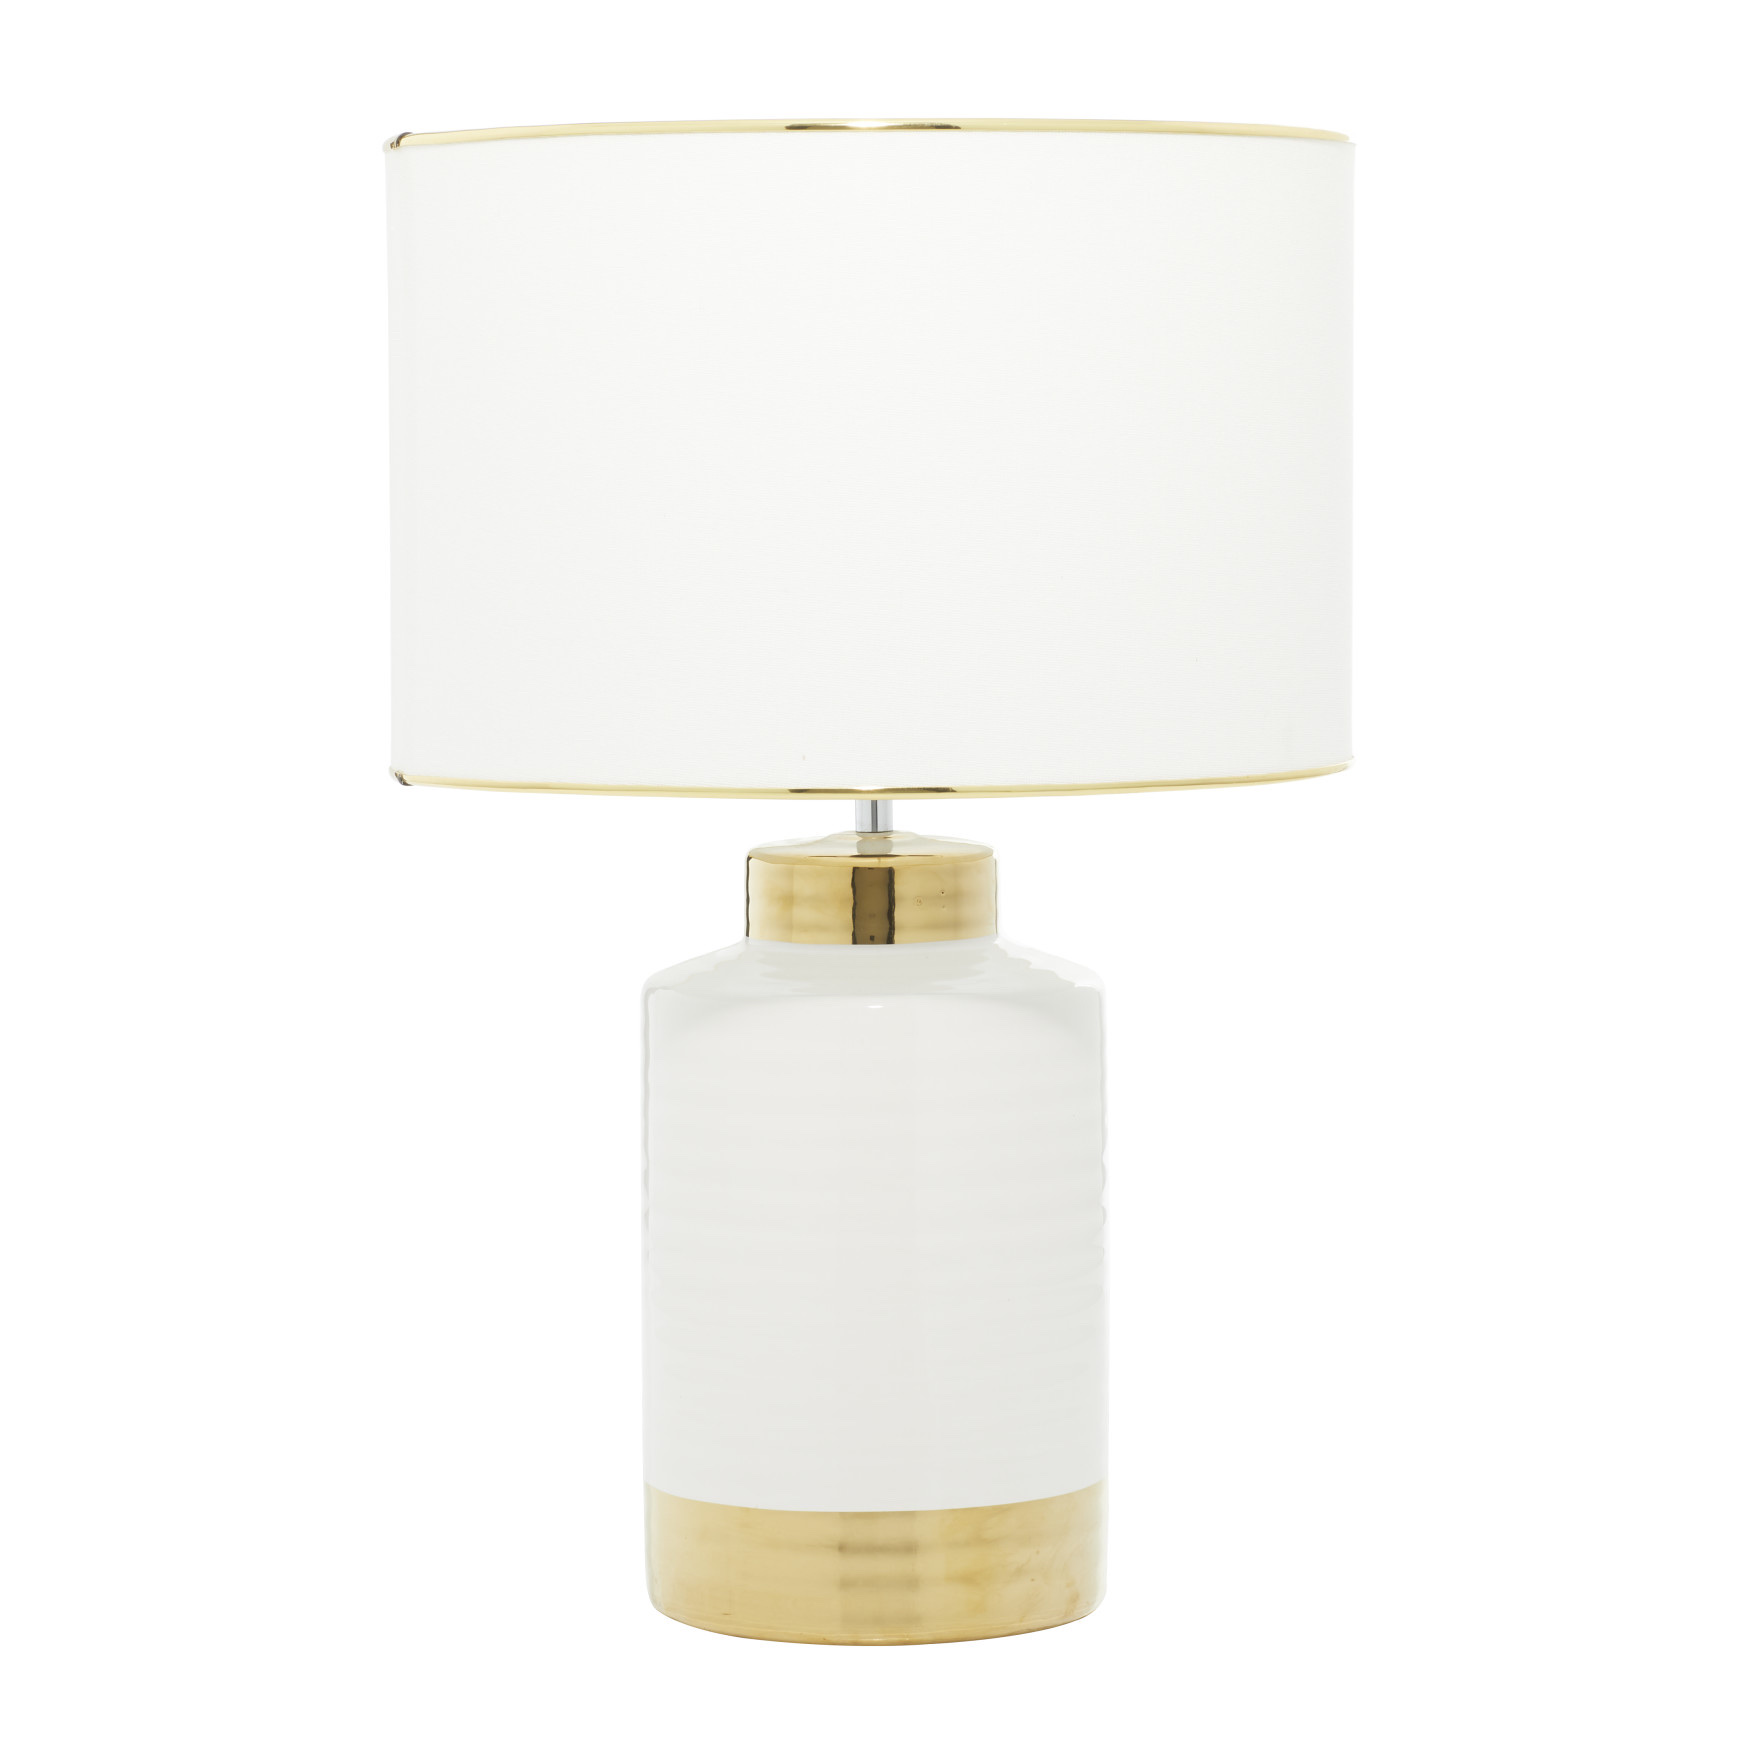 Cosmoliving By Cosmopolitan Ceramic Table Lamp, GOLD